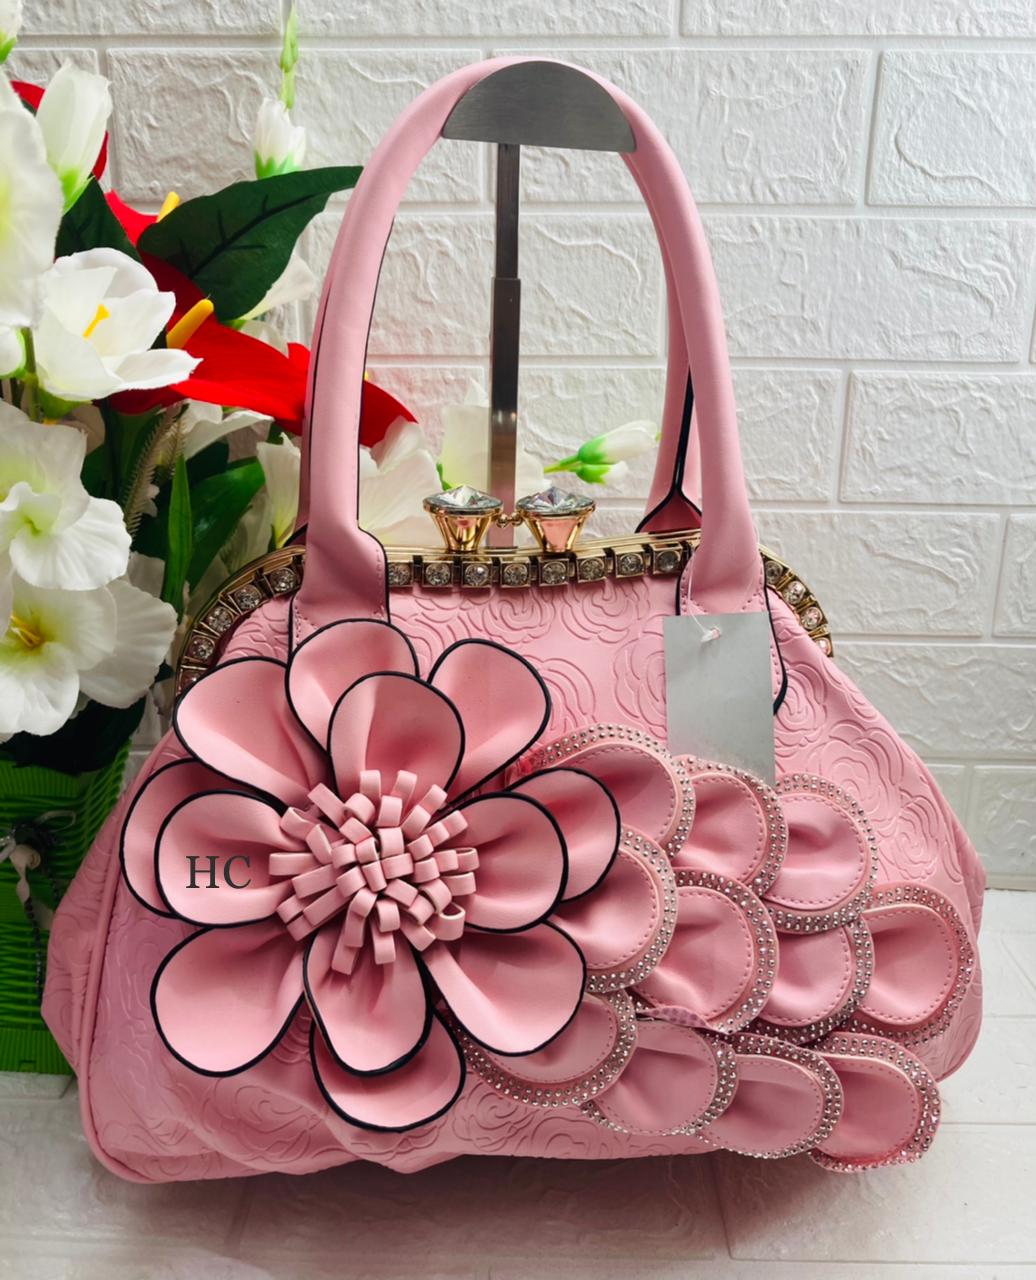 Handbags New Flower design cute handdbags for Girls and Women